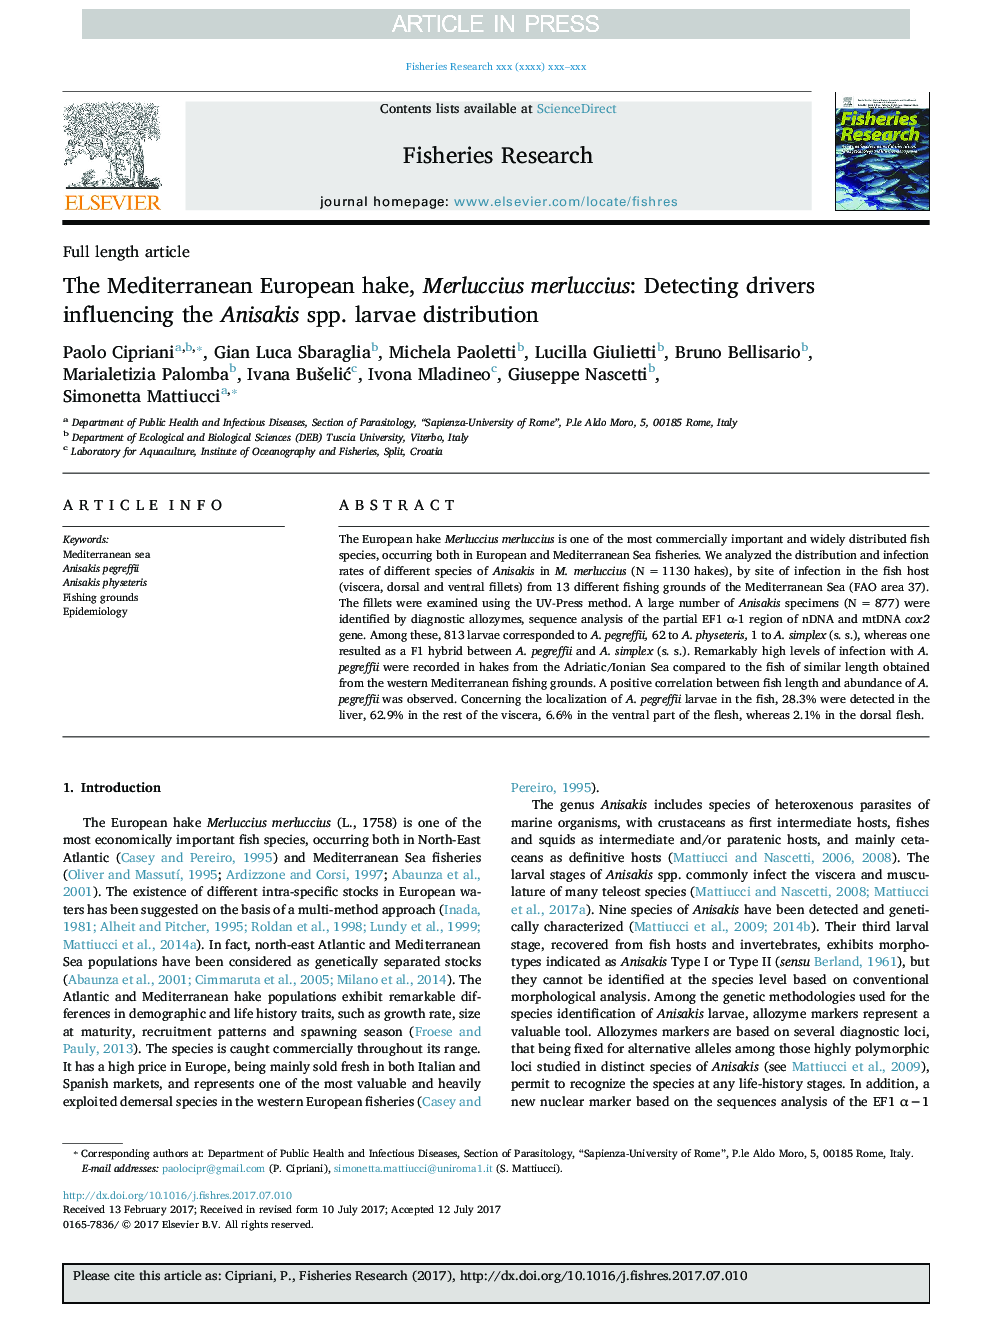 The Mediterranean European hake, Merluccius merluccius: Detecting drivers influencing the Anisakis spp. larvae distribution